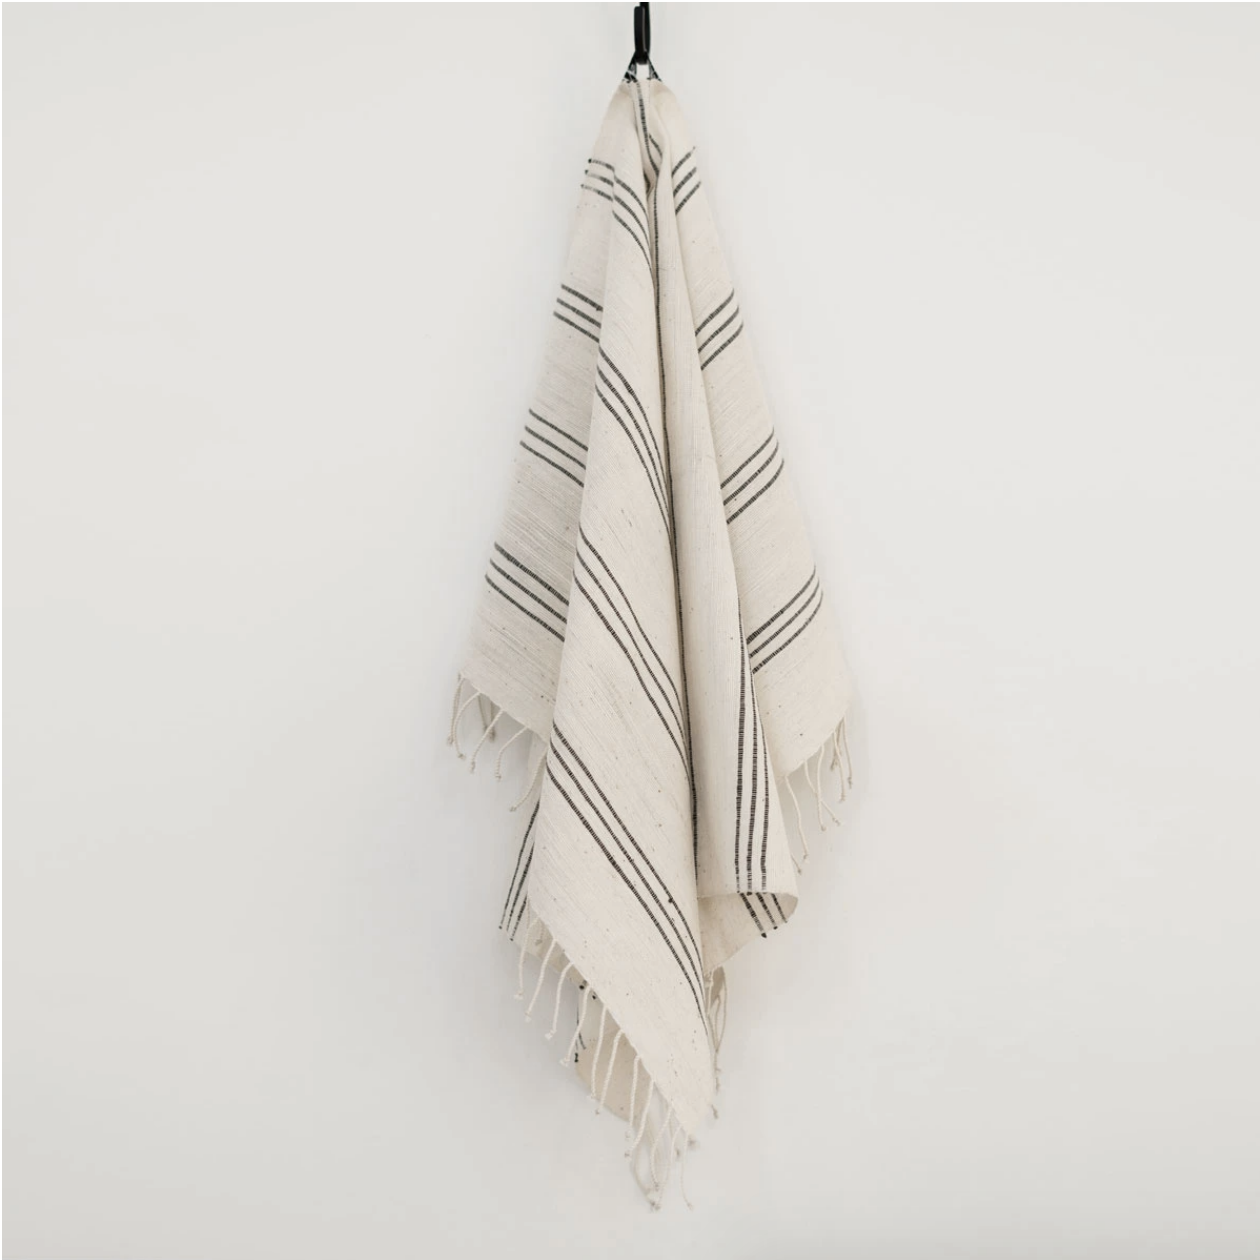 Sera Helsinki Tihku Collection, Size: Hand Towel Size: 19″ x 30″, Colour: Grey with White Stripes